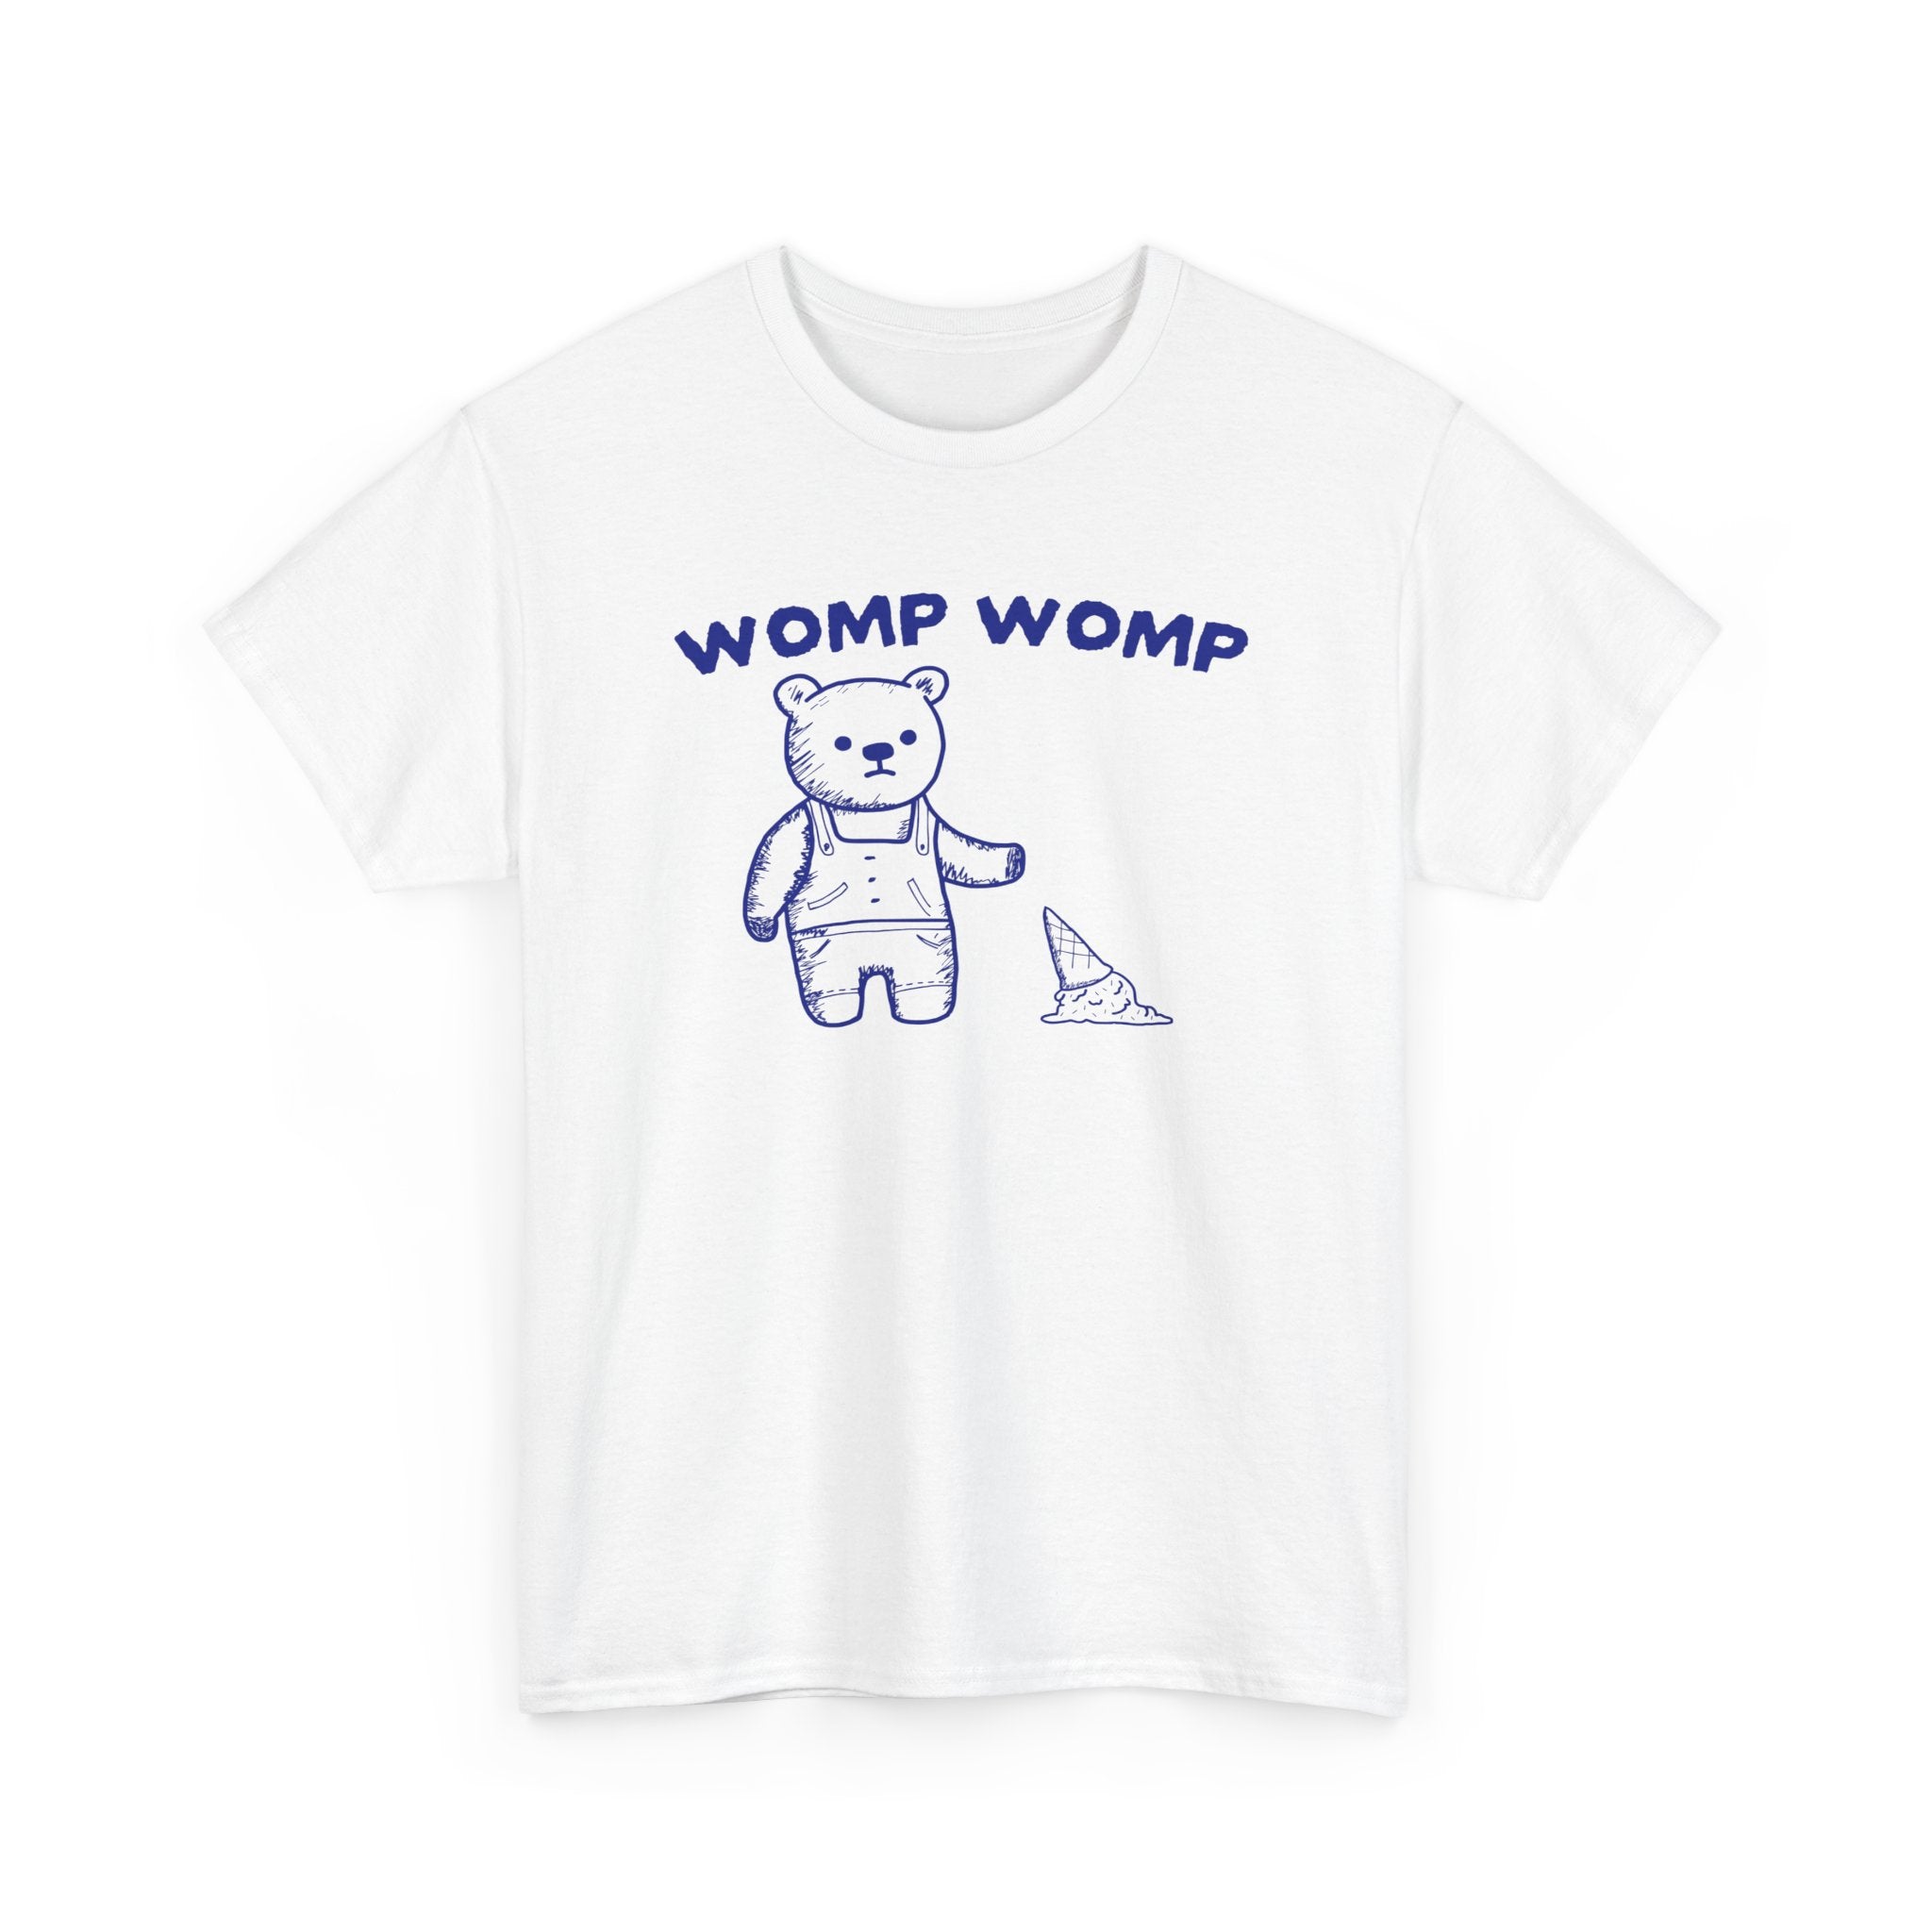 Womp Womp Shirt